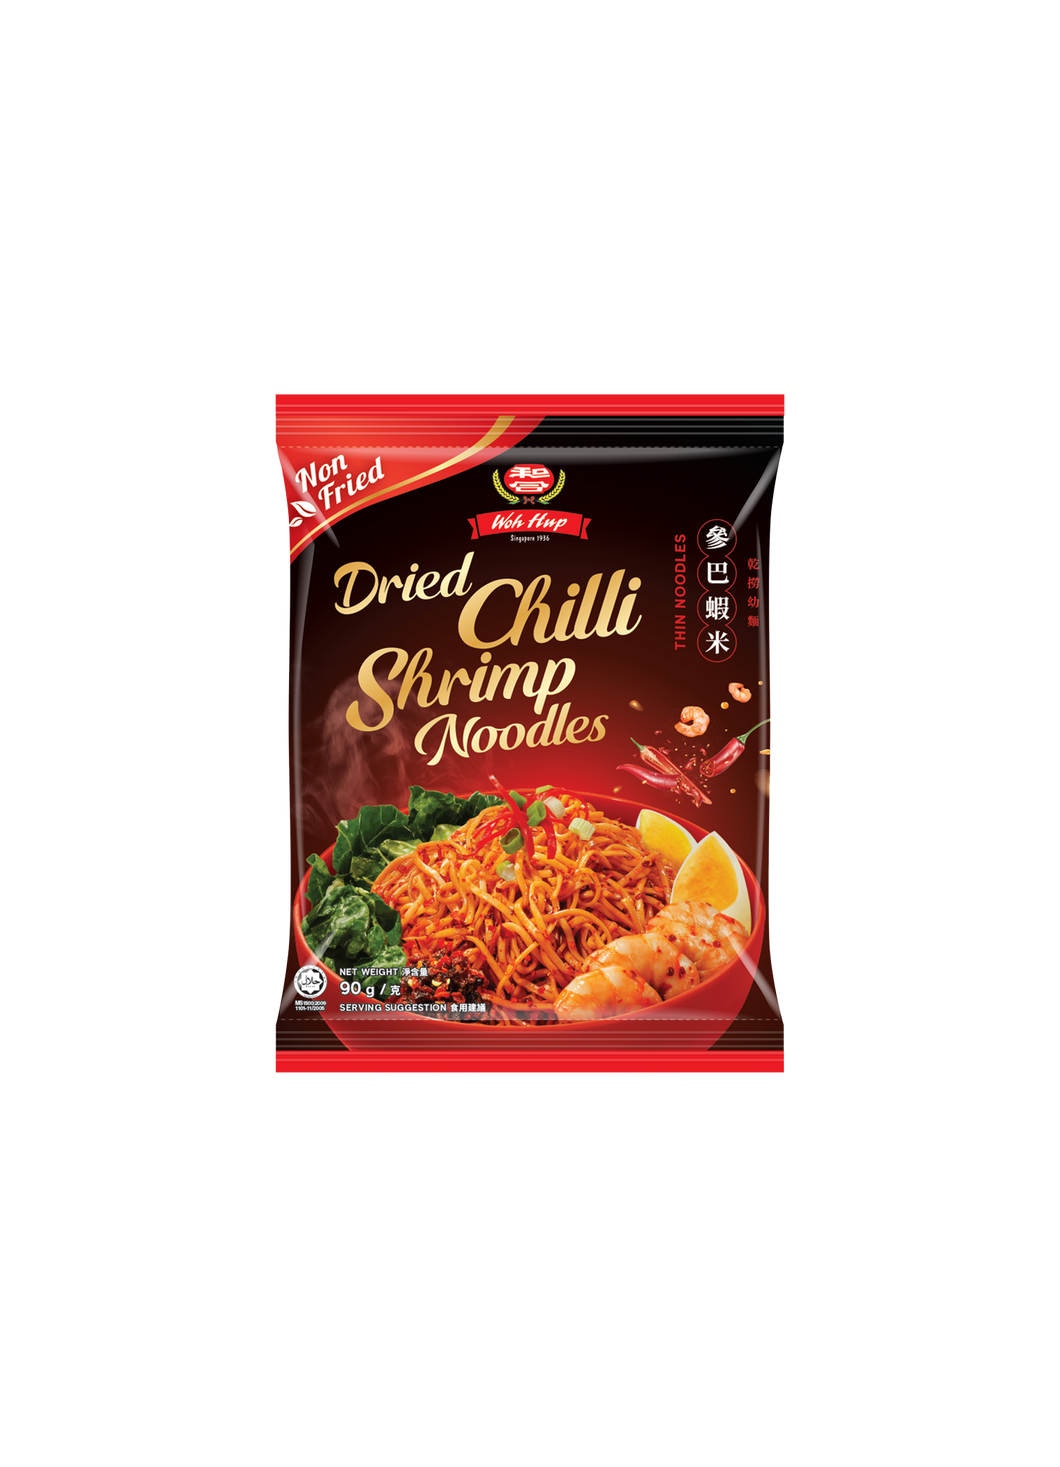 Woh Hup Dried Chilli Shrimp Noodles 90g